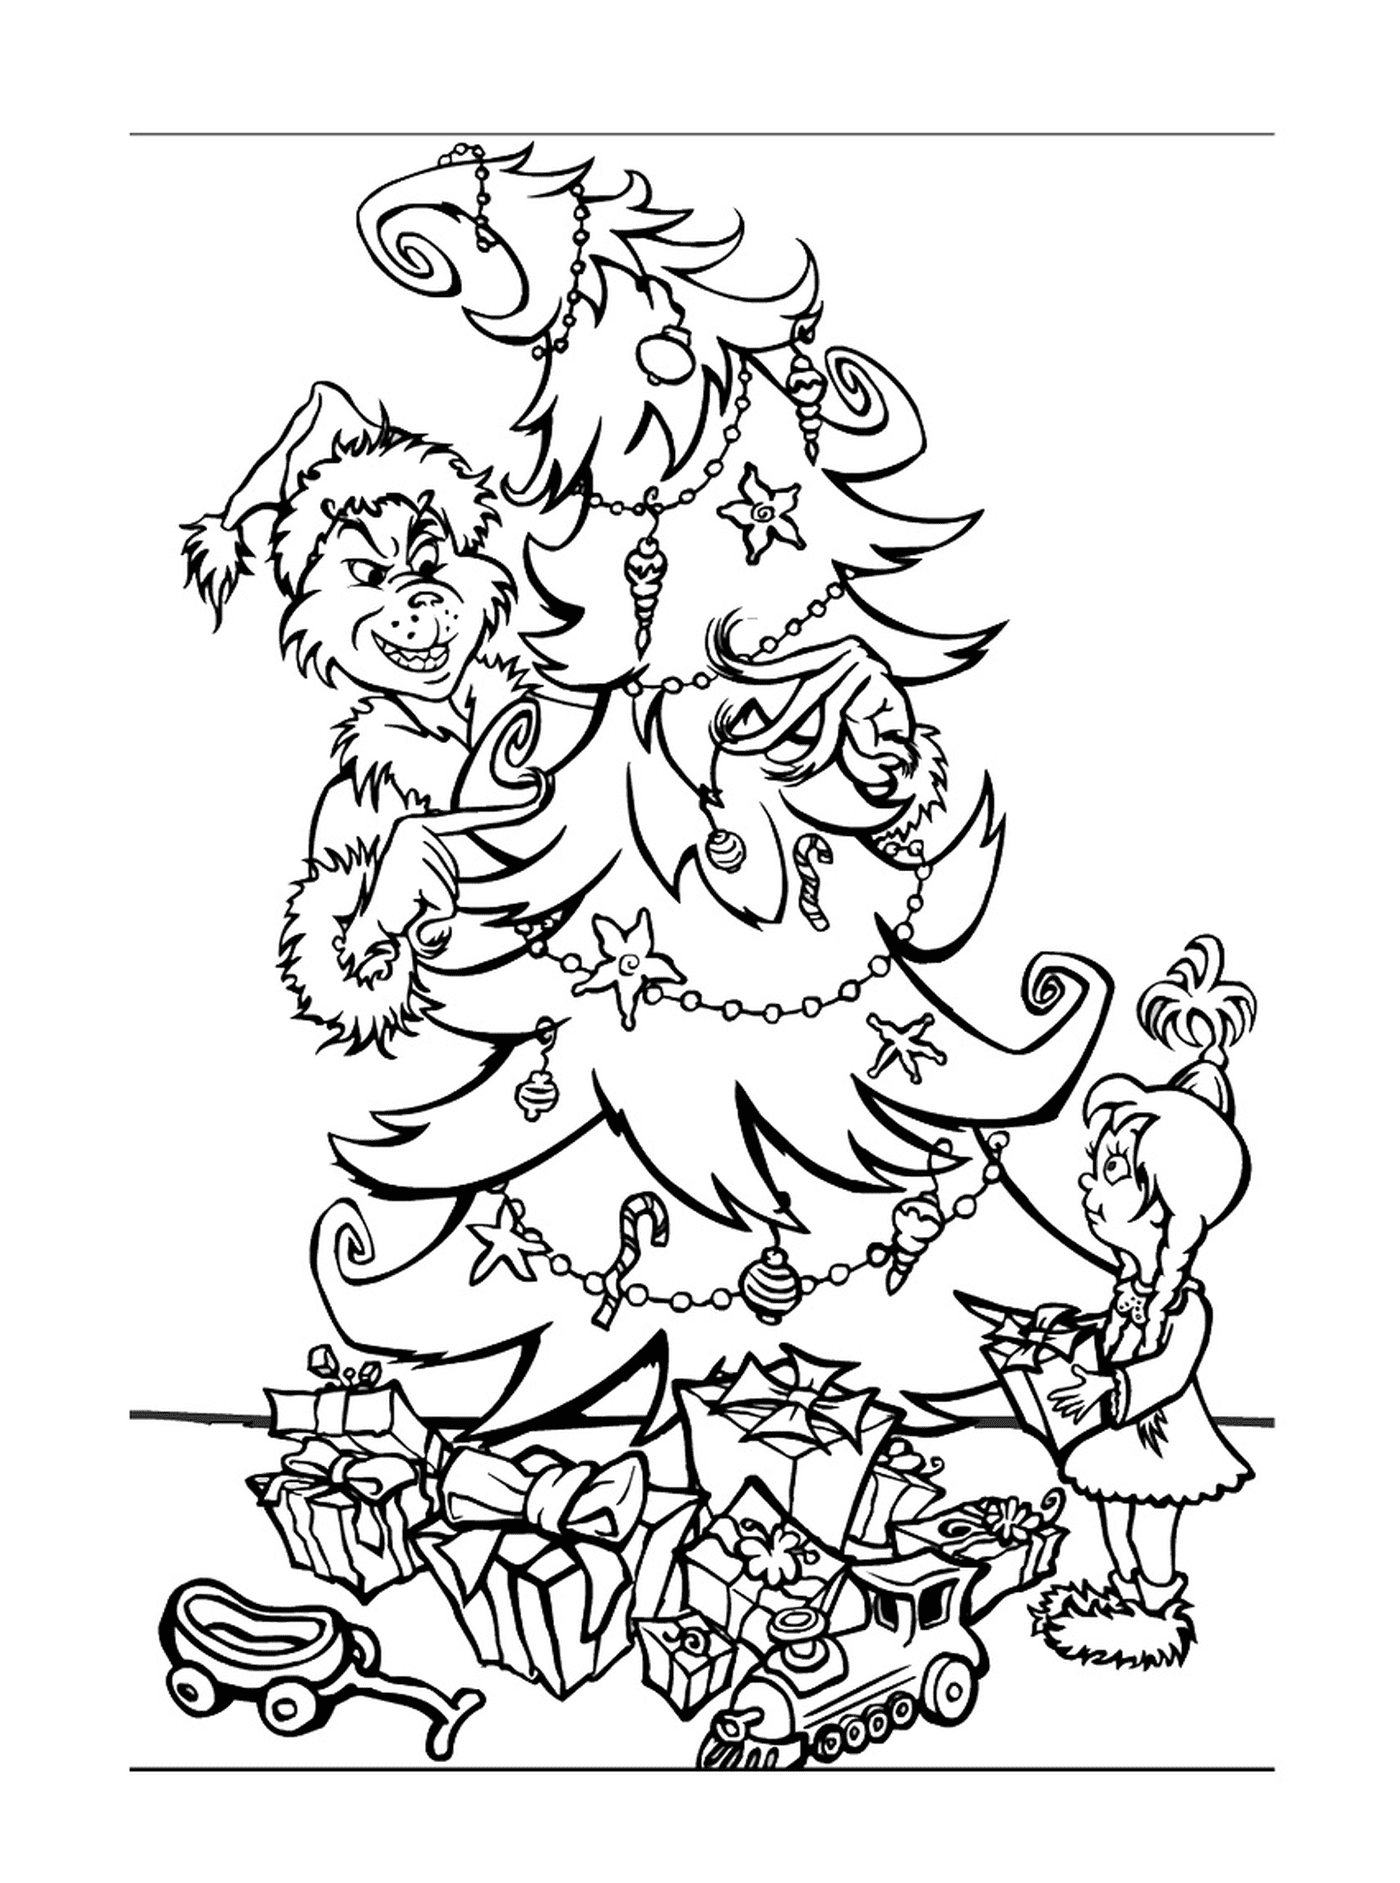  Santa Grinch behind the tree 